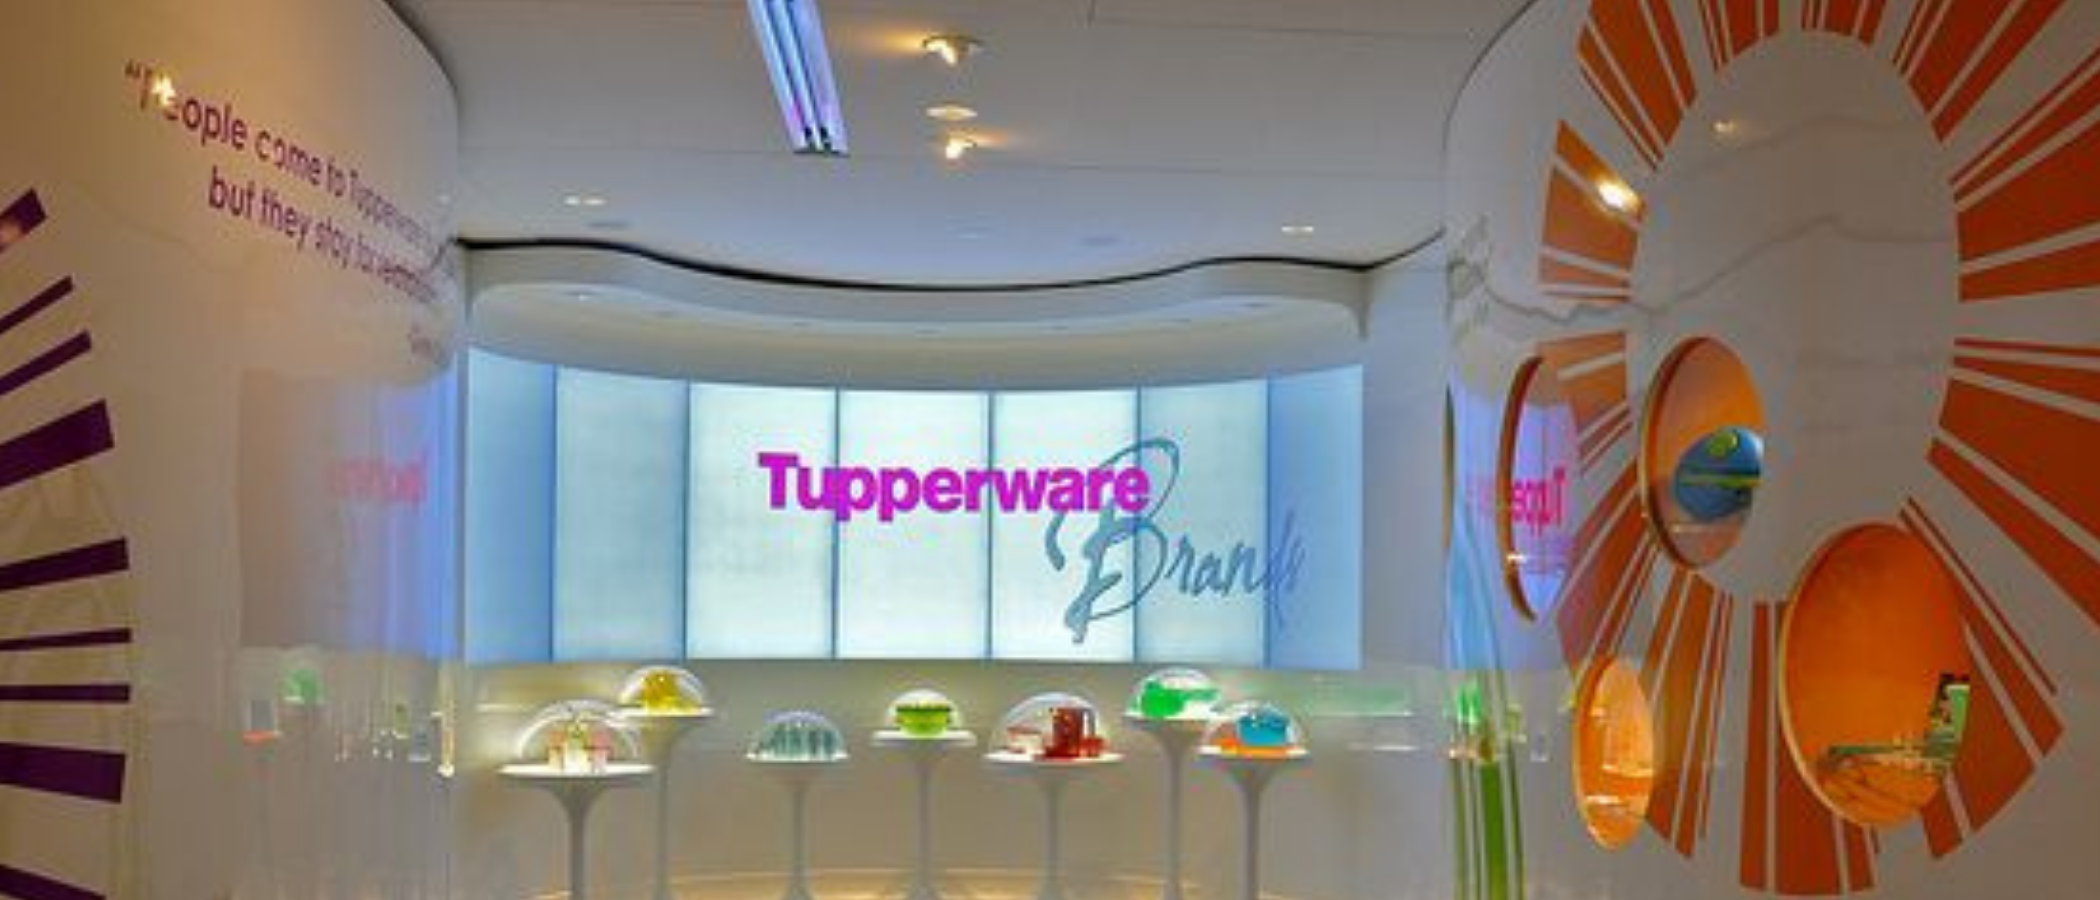 Tupperware Net Sales See 18% Decline in 2022 - Direct Selling News